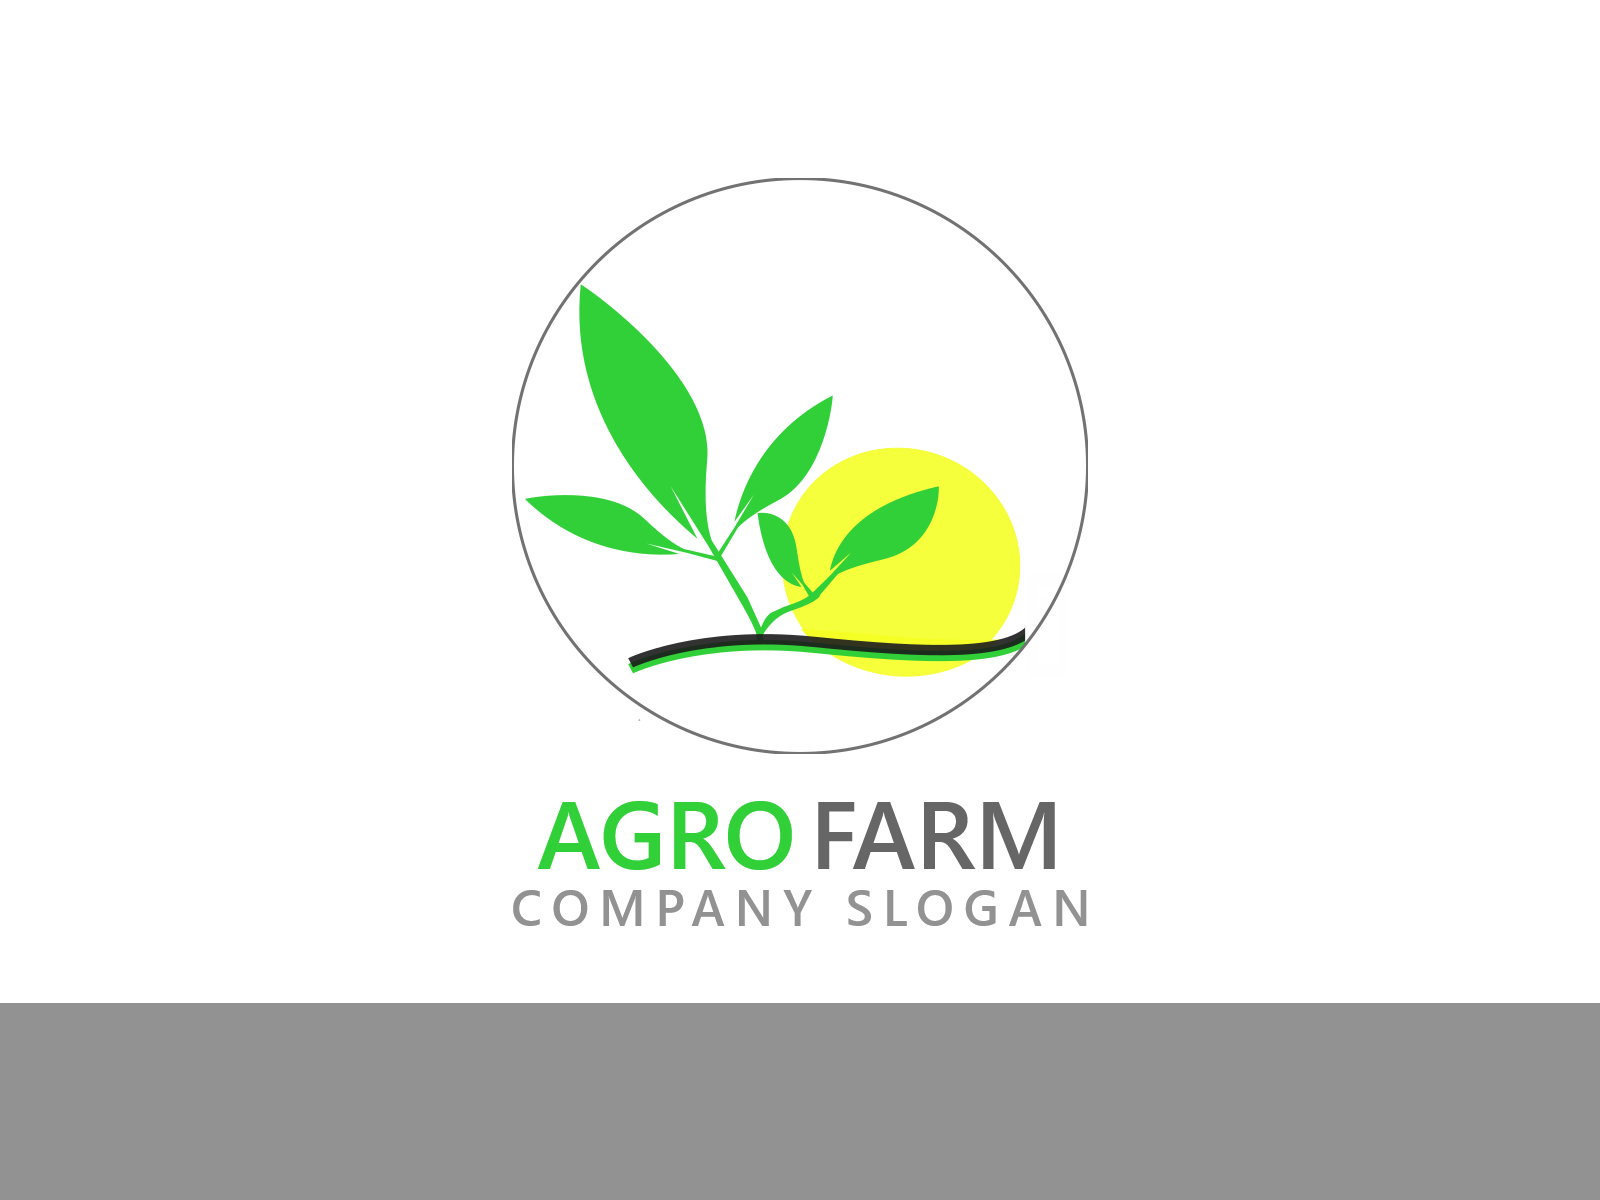 Agro factory logo template this design use farm Vector Image